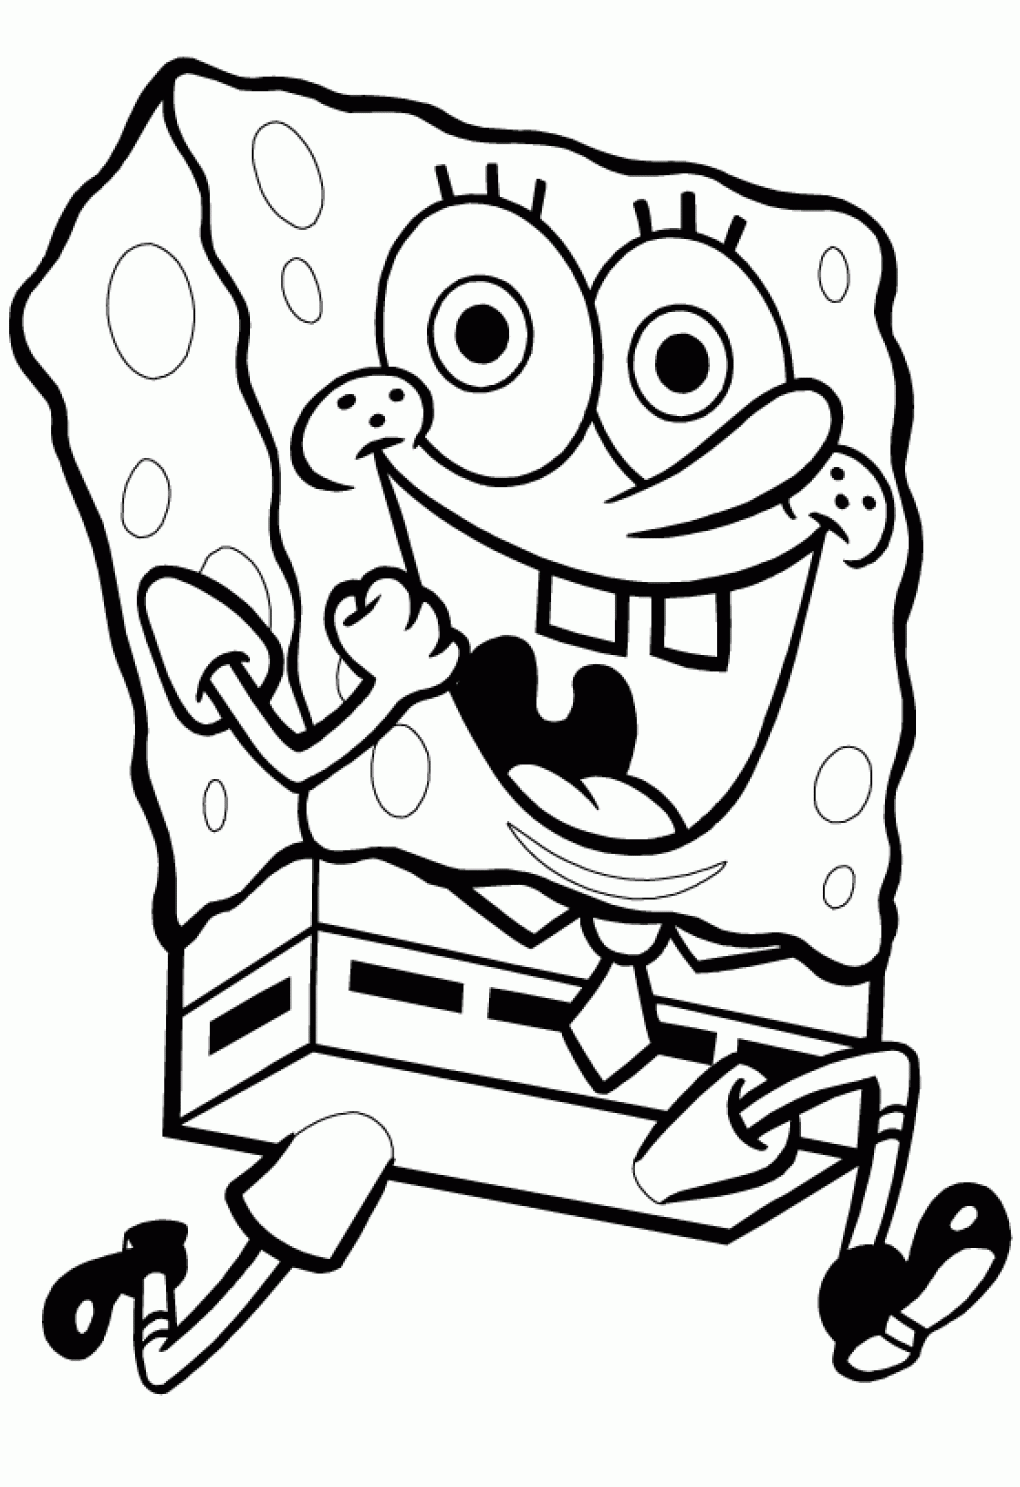 Free Spongebob Sandy Coloring Pages Download Free Clip Art Free Clip Art On Clipart Library